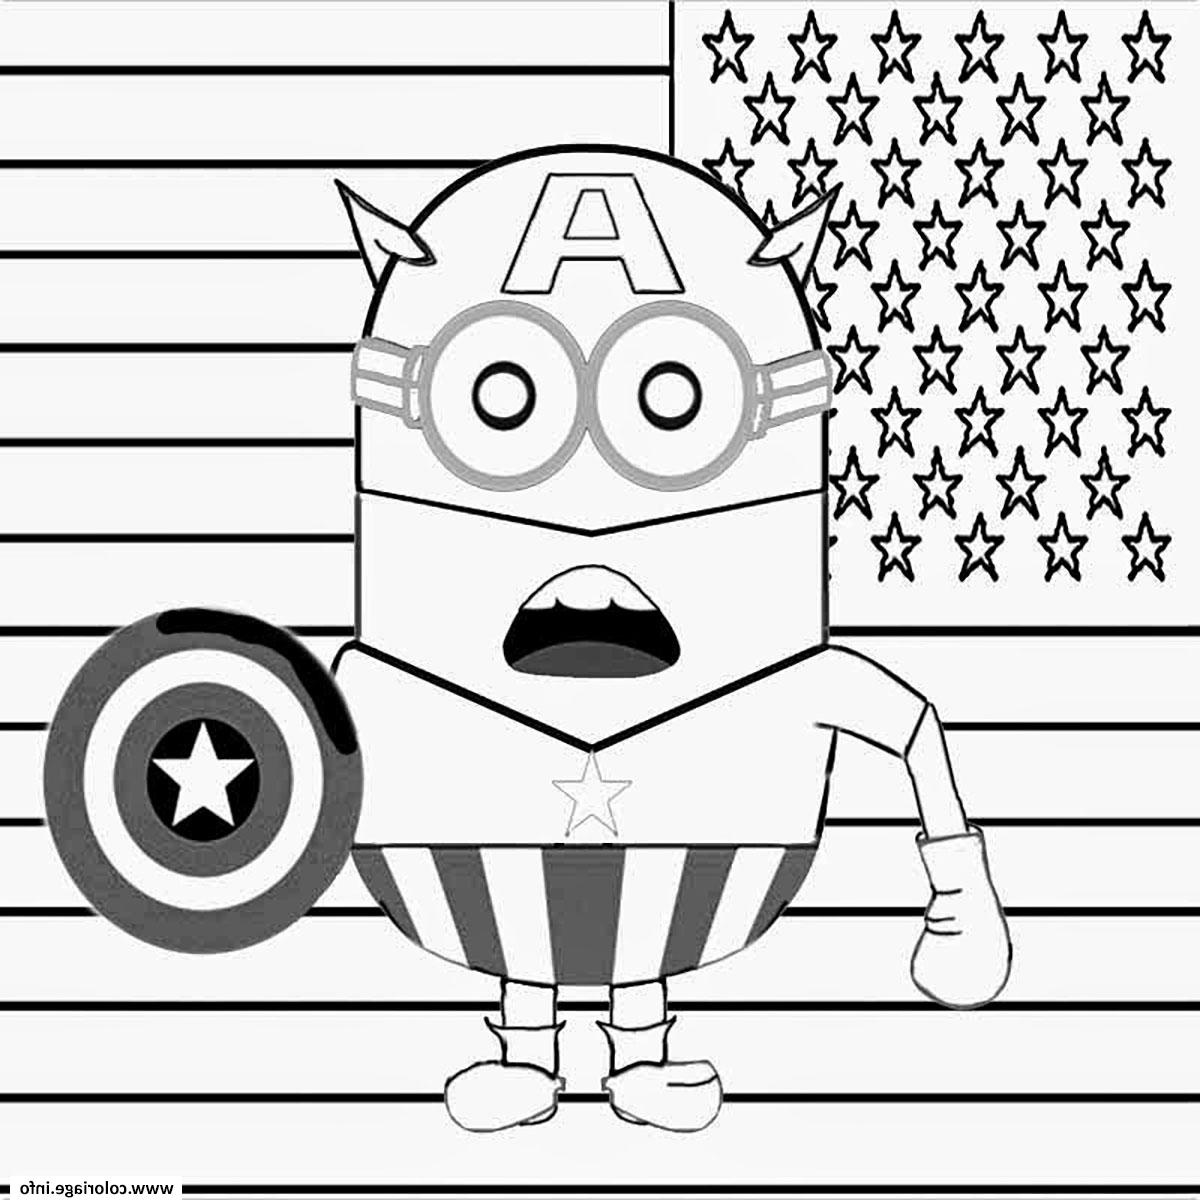 Capitaine America Coloriage Cool Images Coloriage Hero Minion Captain America Dessin